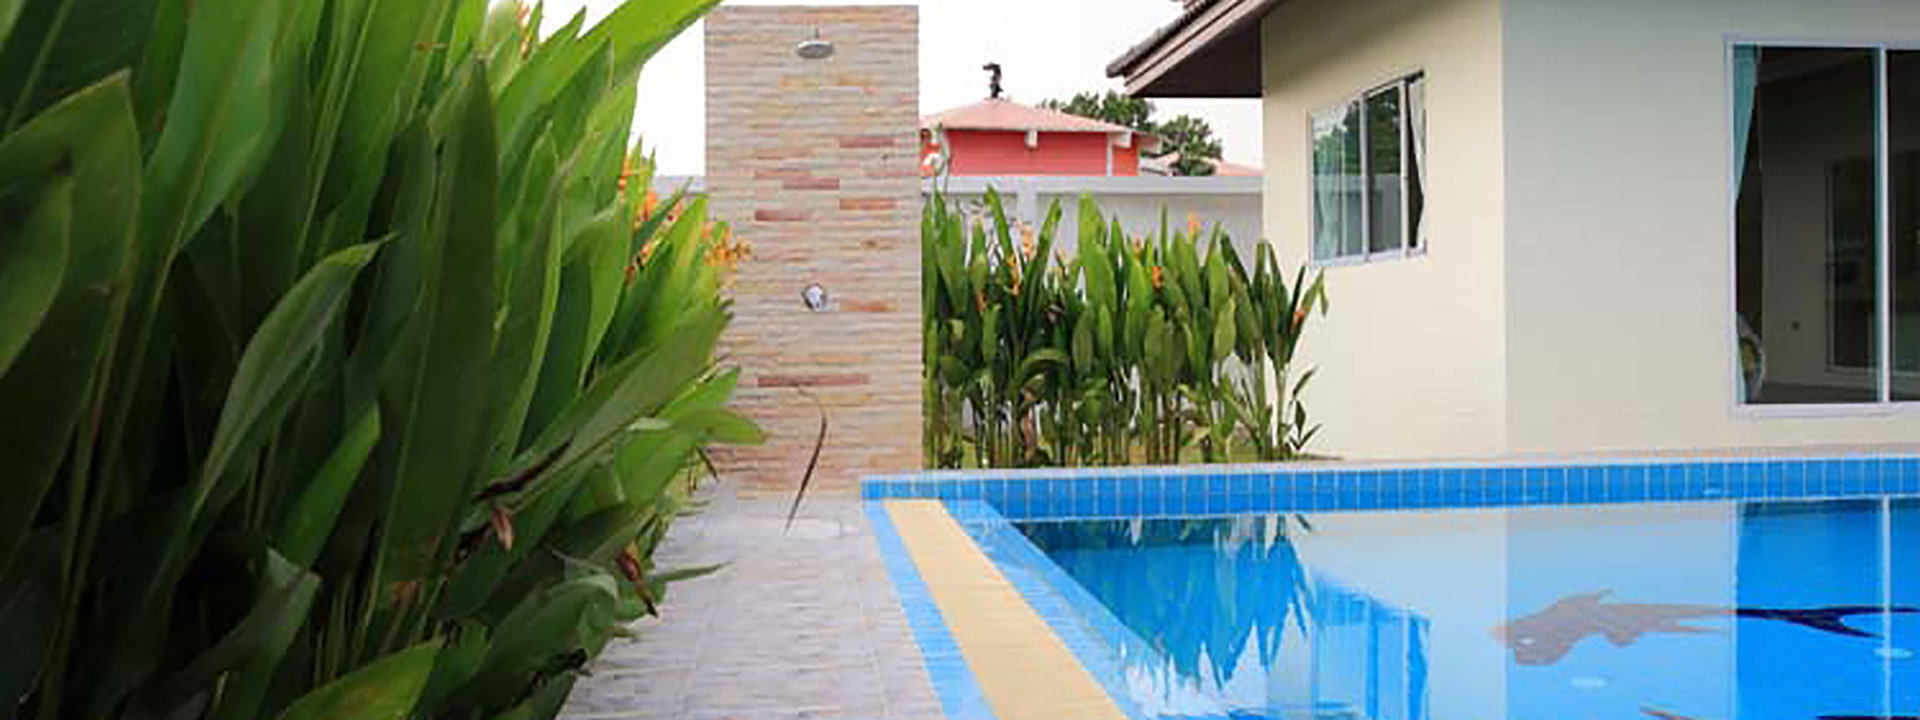 3 Bedroom Villas near Ramayana Water Park in Na Jomtien Pattaya.